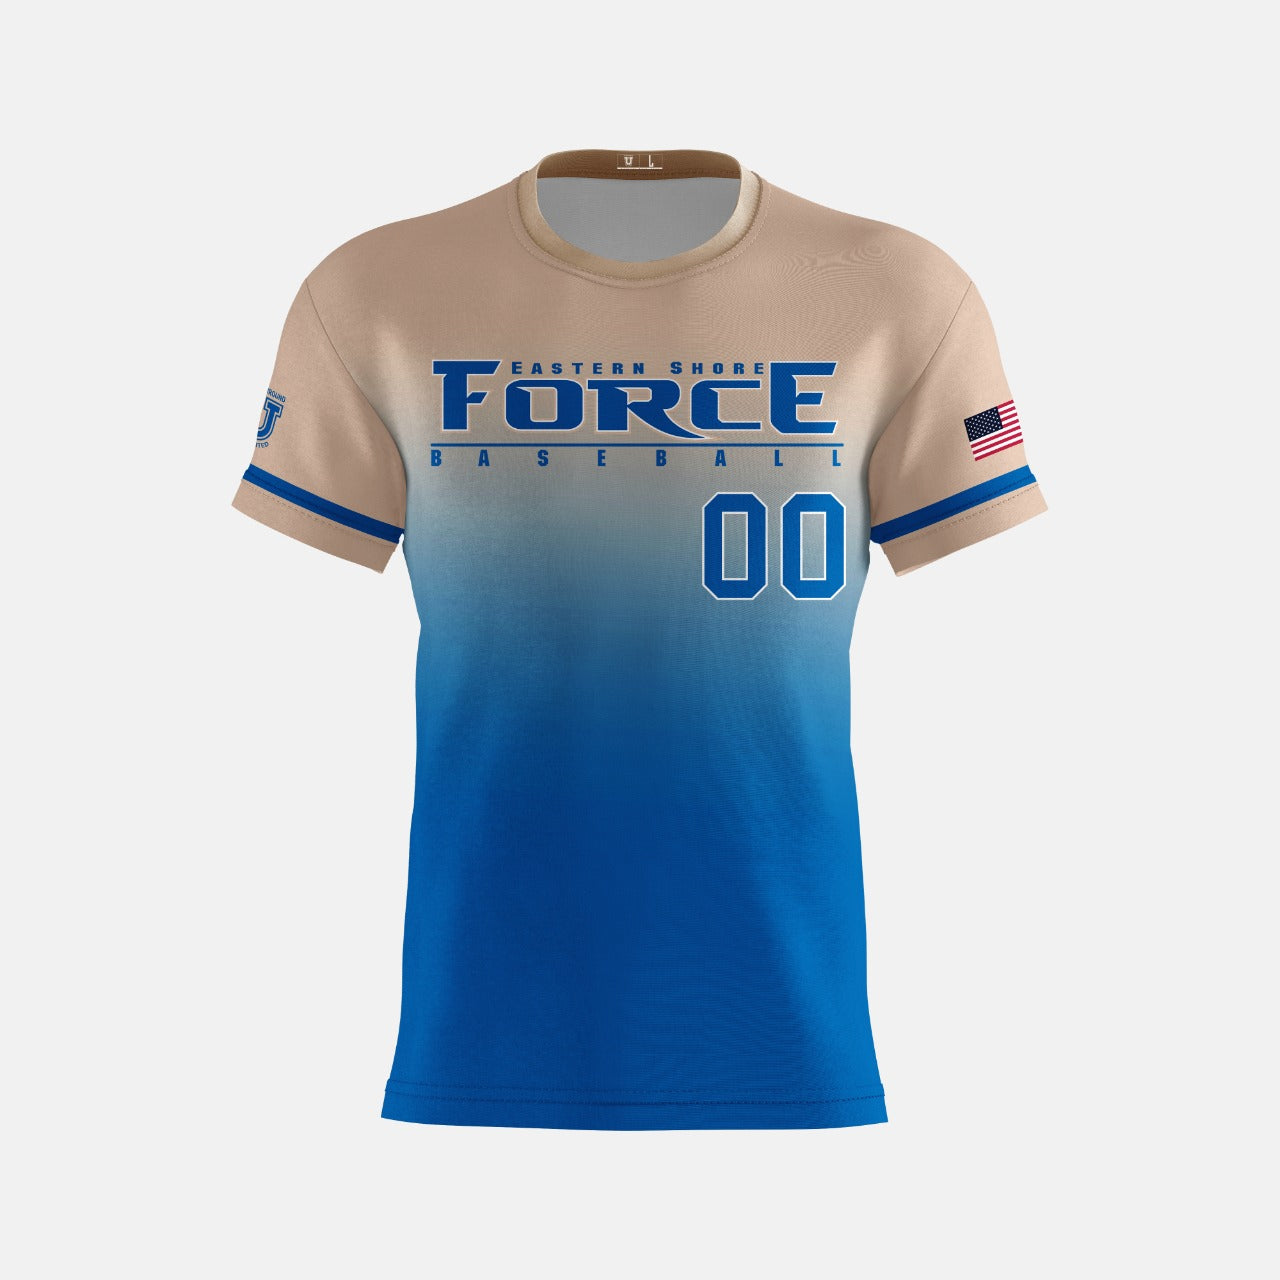 Eastern Shore Force Performance Dri Tech Shirt ~ Force Blue to Gold Fade